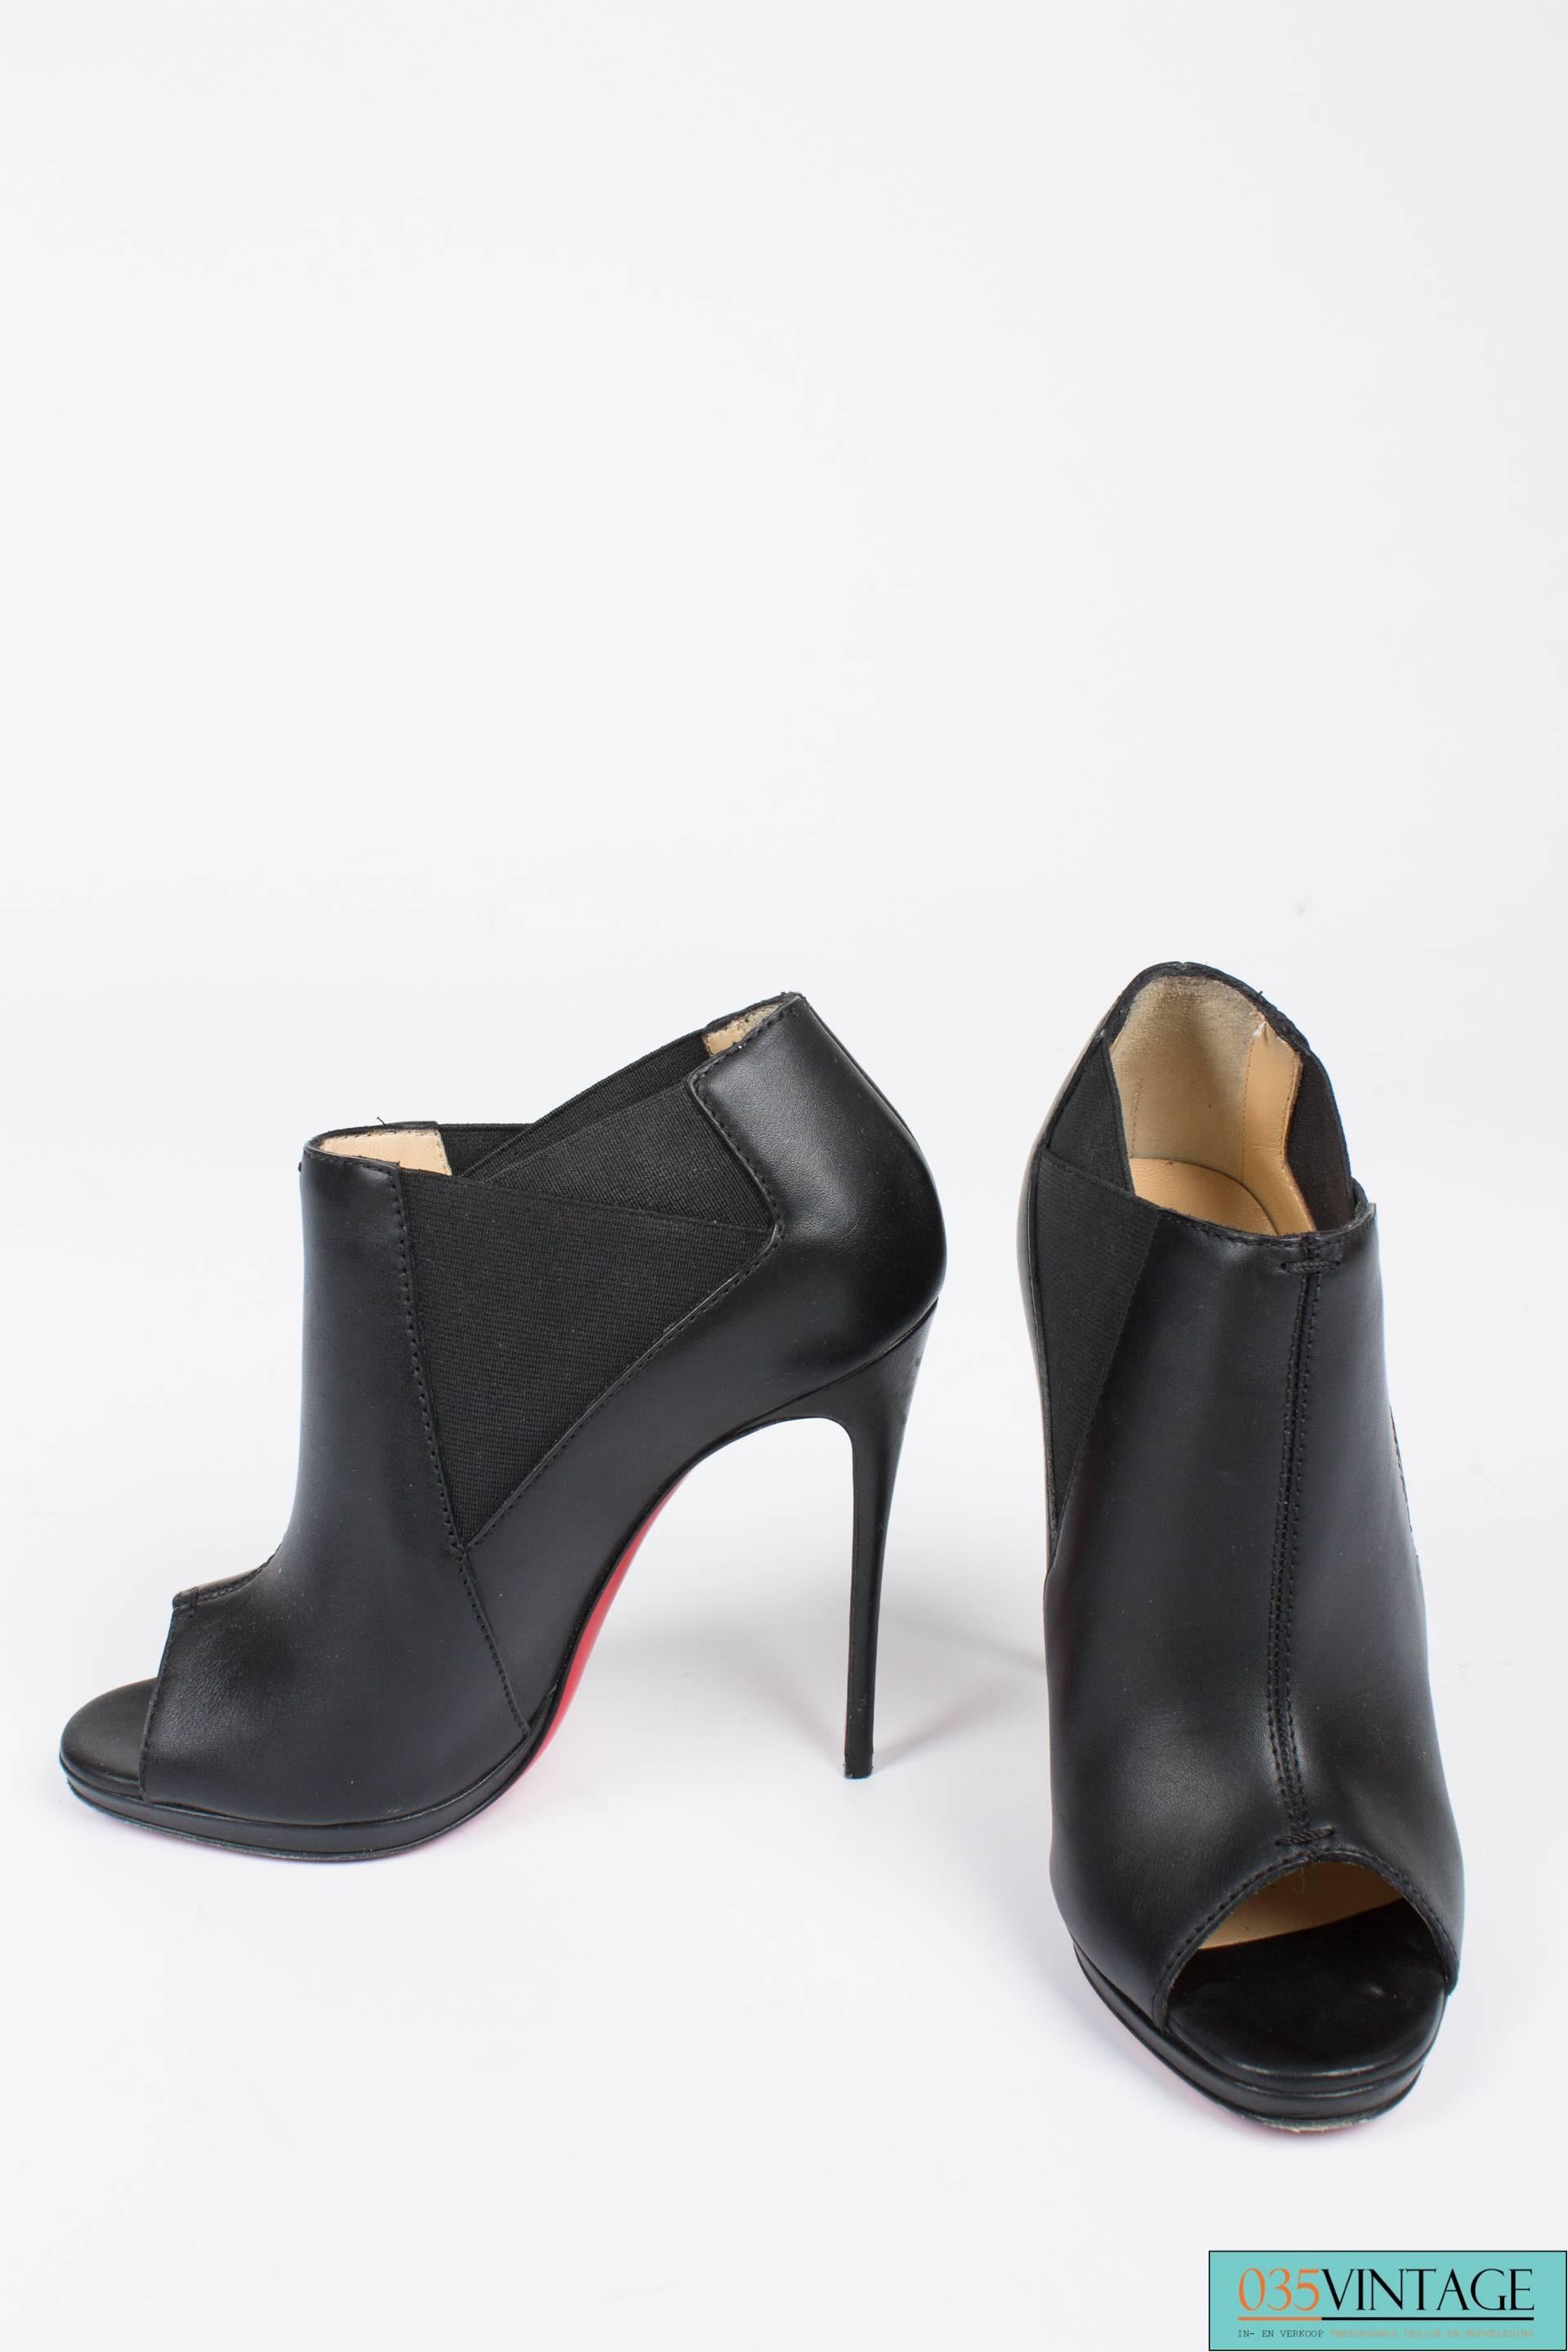 Black Louboutin High Heeled Peep Toe Boots - black leather 